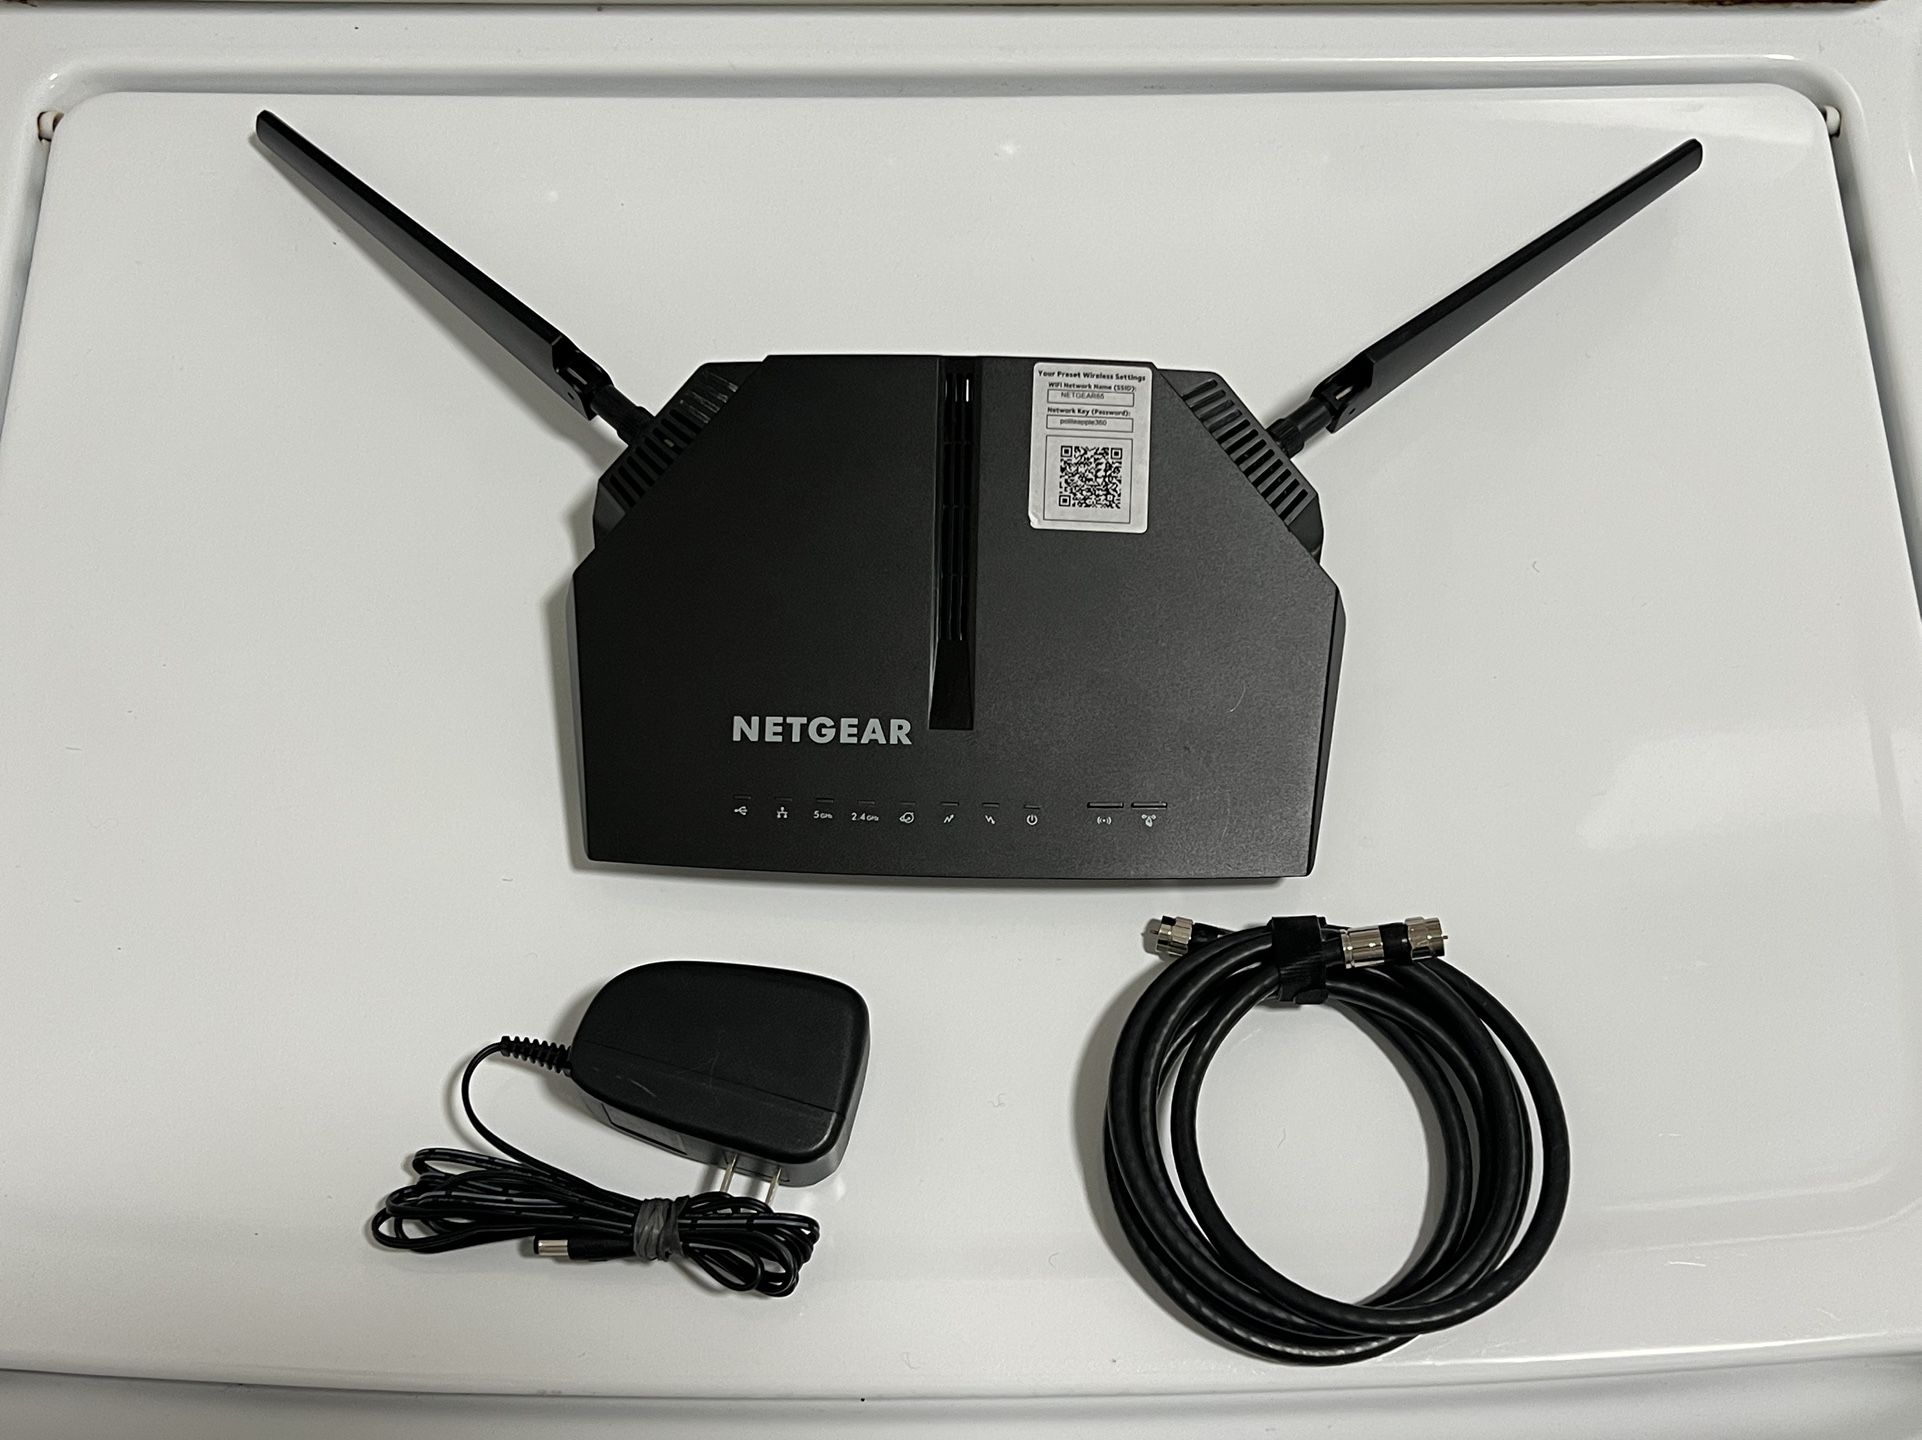 NETGEAR Cable Modem WiFi Router Combo C6220 